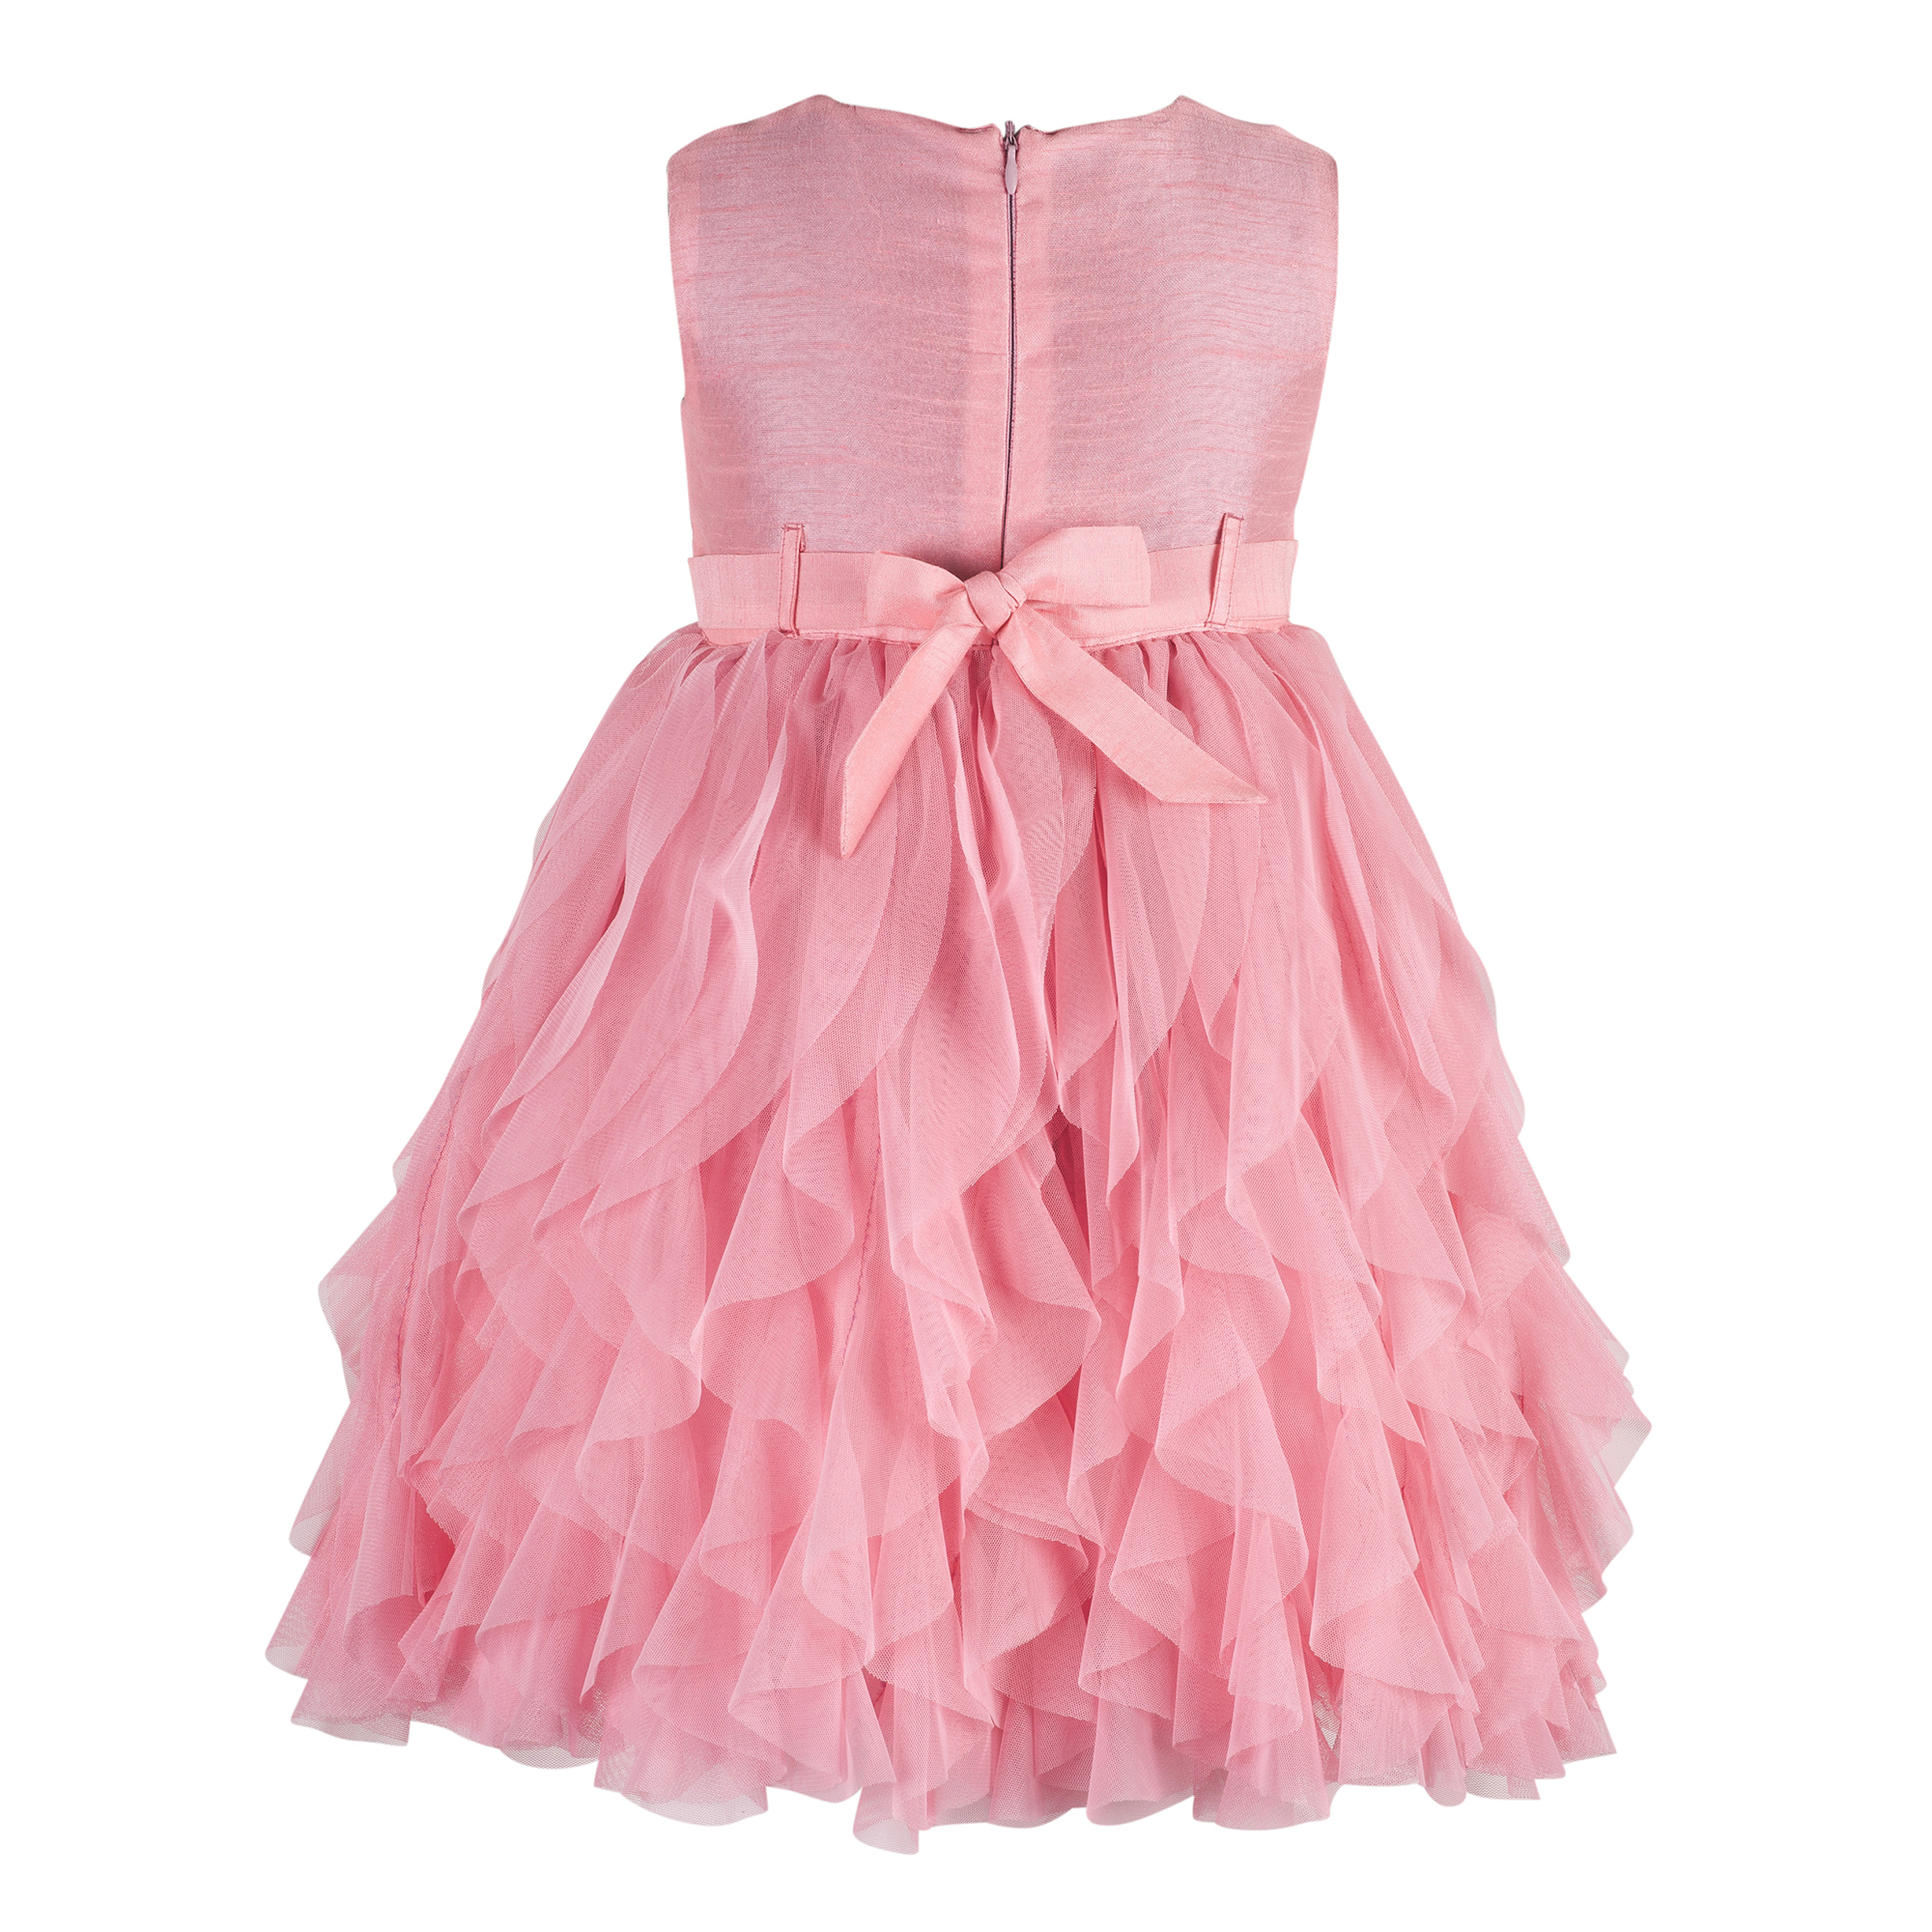 Kids Peach waterfall dress